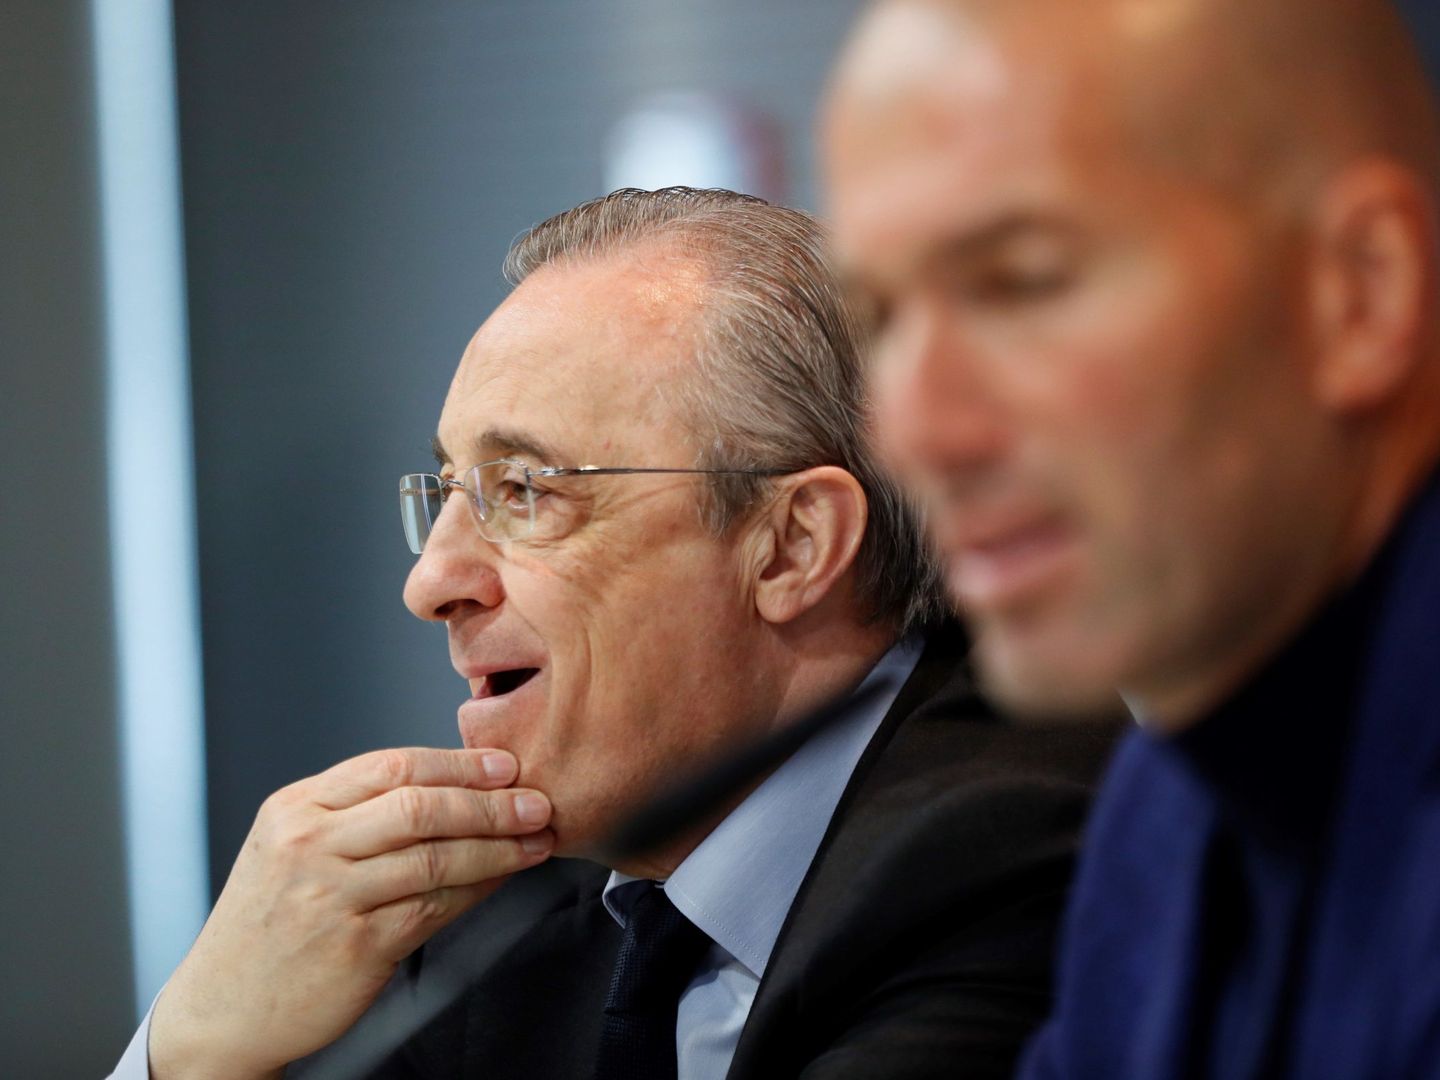 Florentino, pensativo, durante la despedida de Zidane. (Efe)